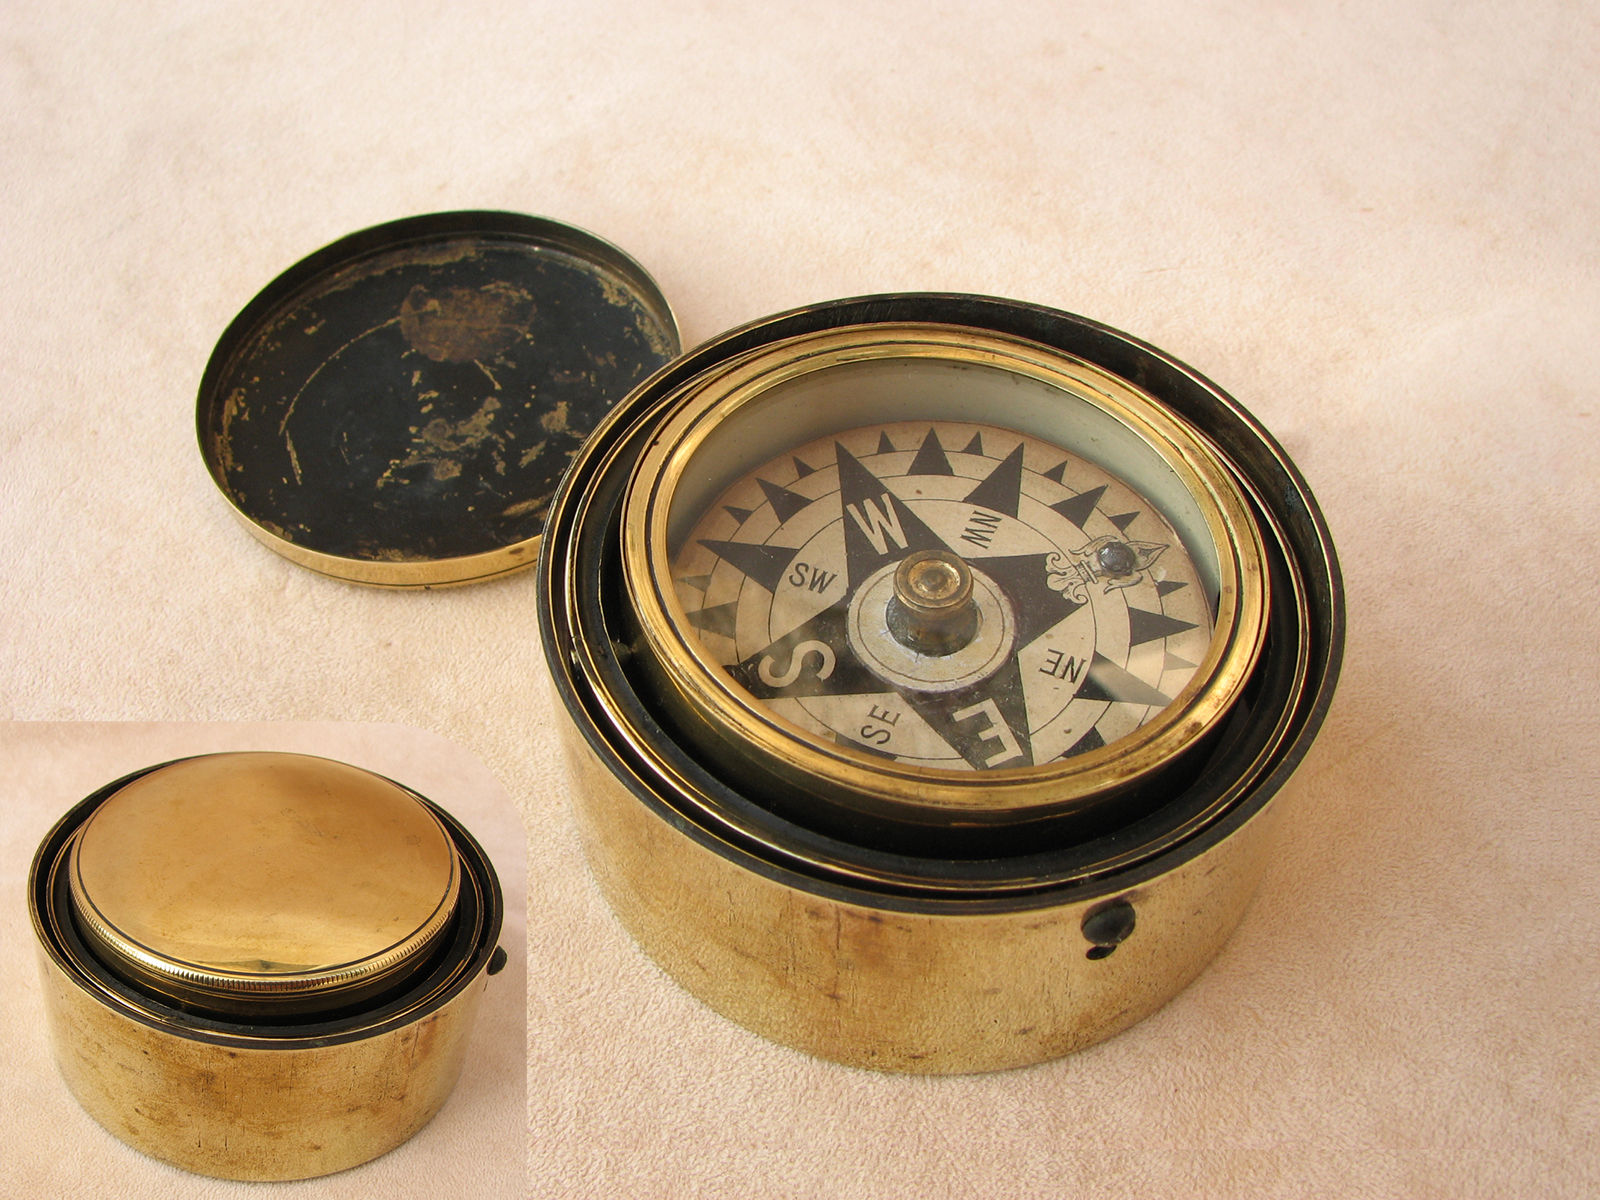 Mariners small brass gimbal mounted compass circa 1840